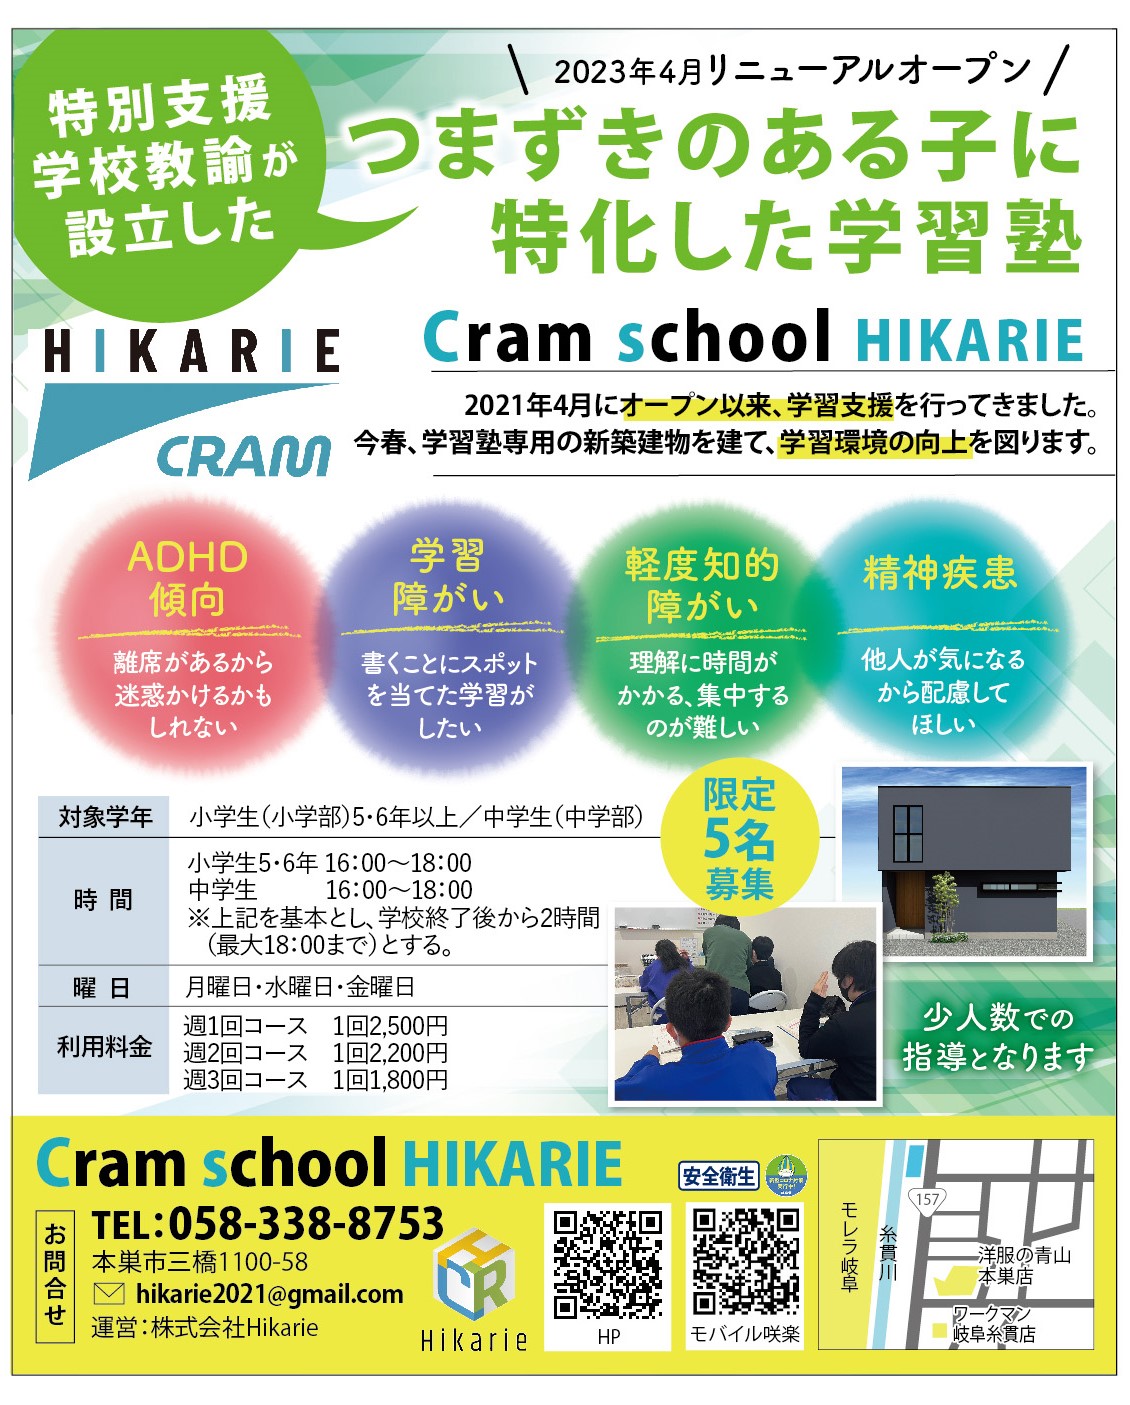 Cram school Hikarie チラシ